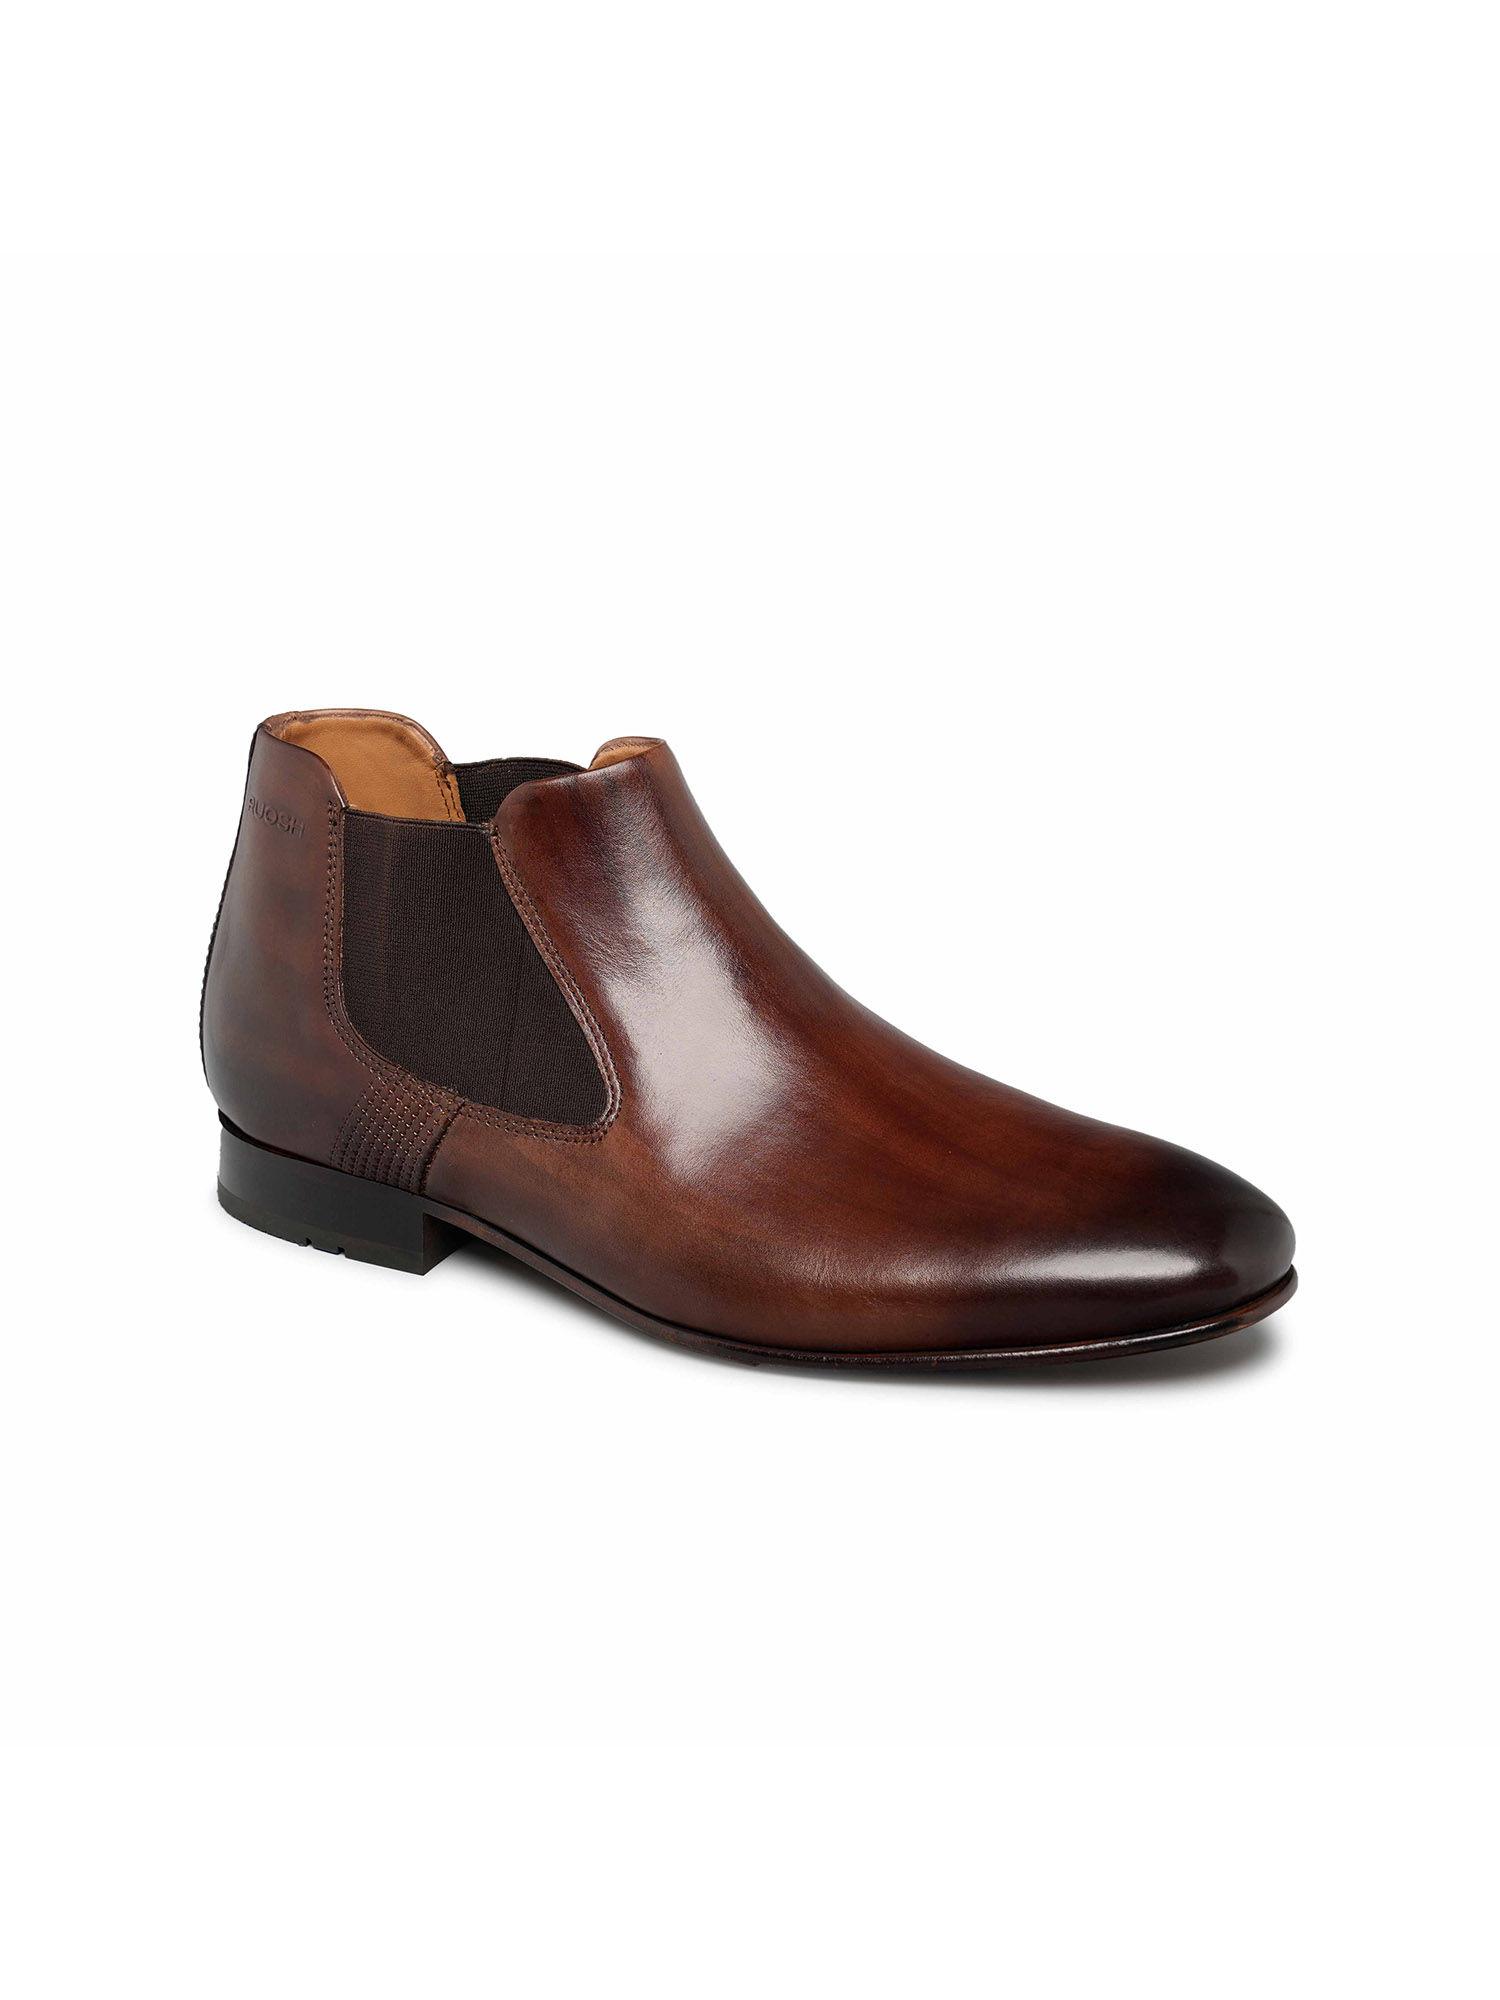 men-formal-slip-on-boot-shoes-brown